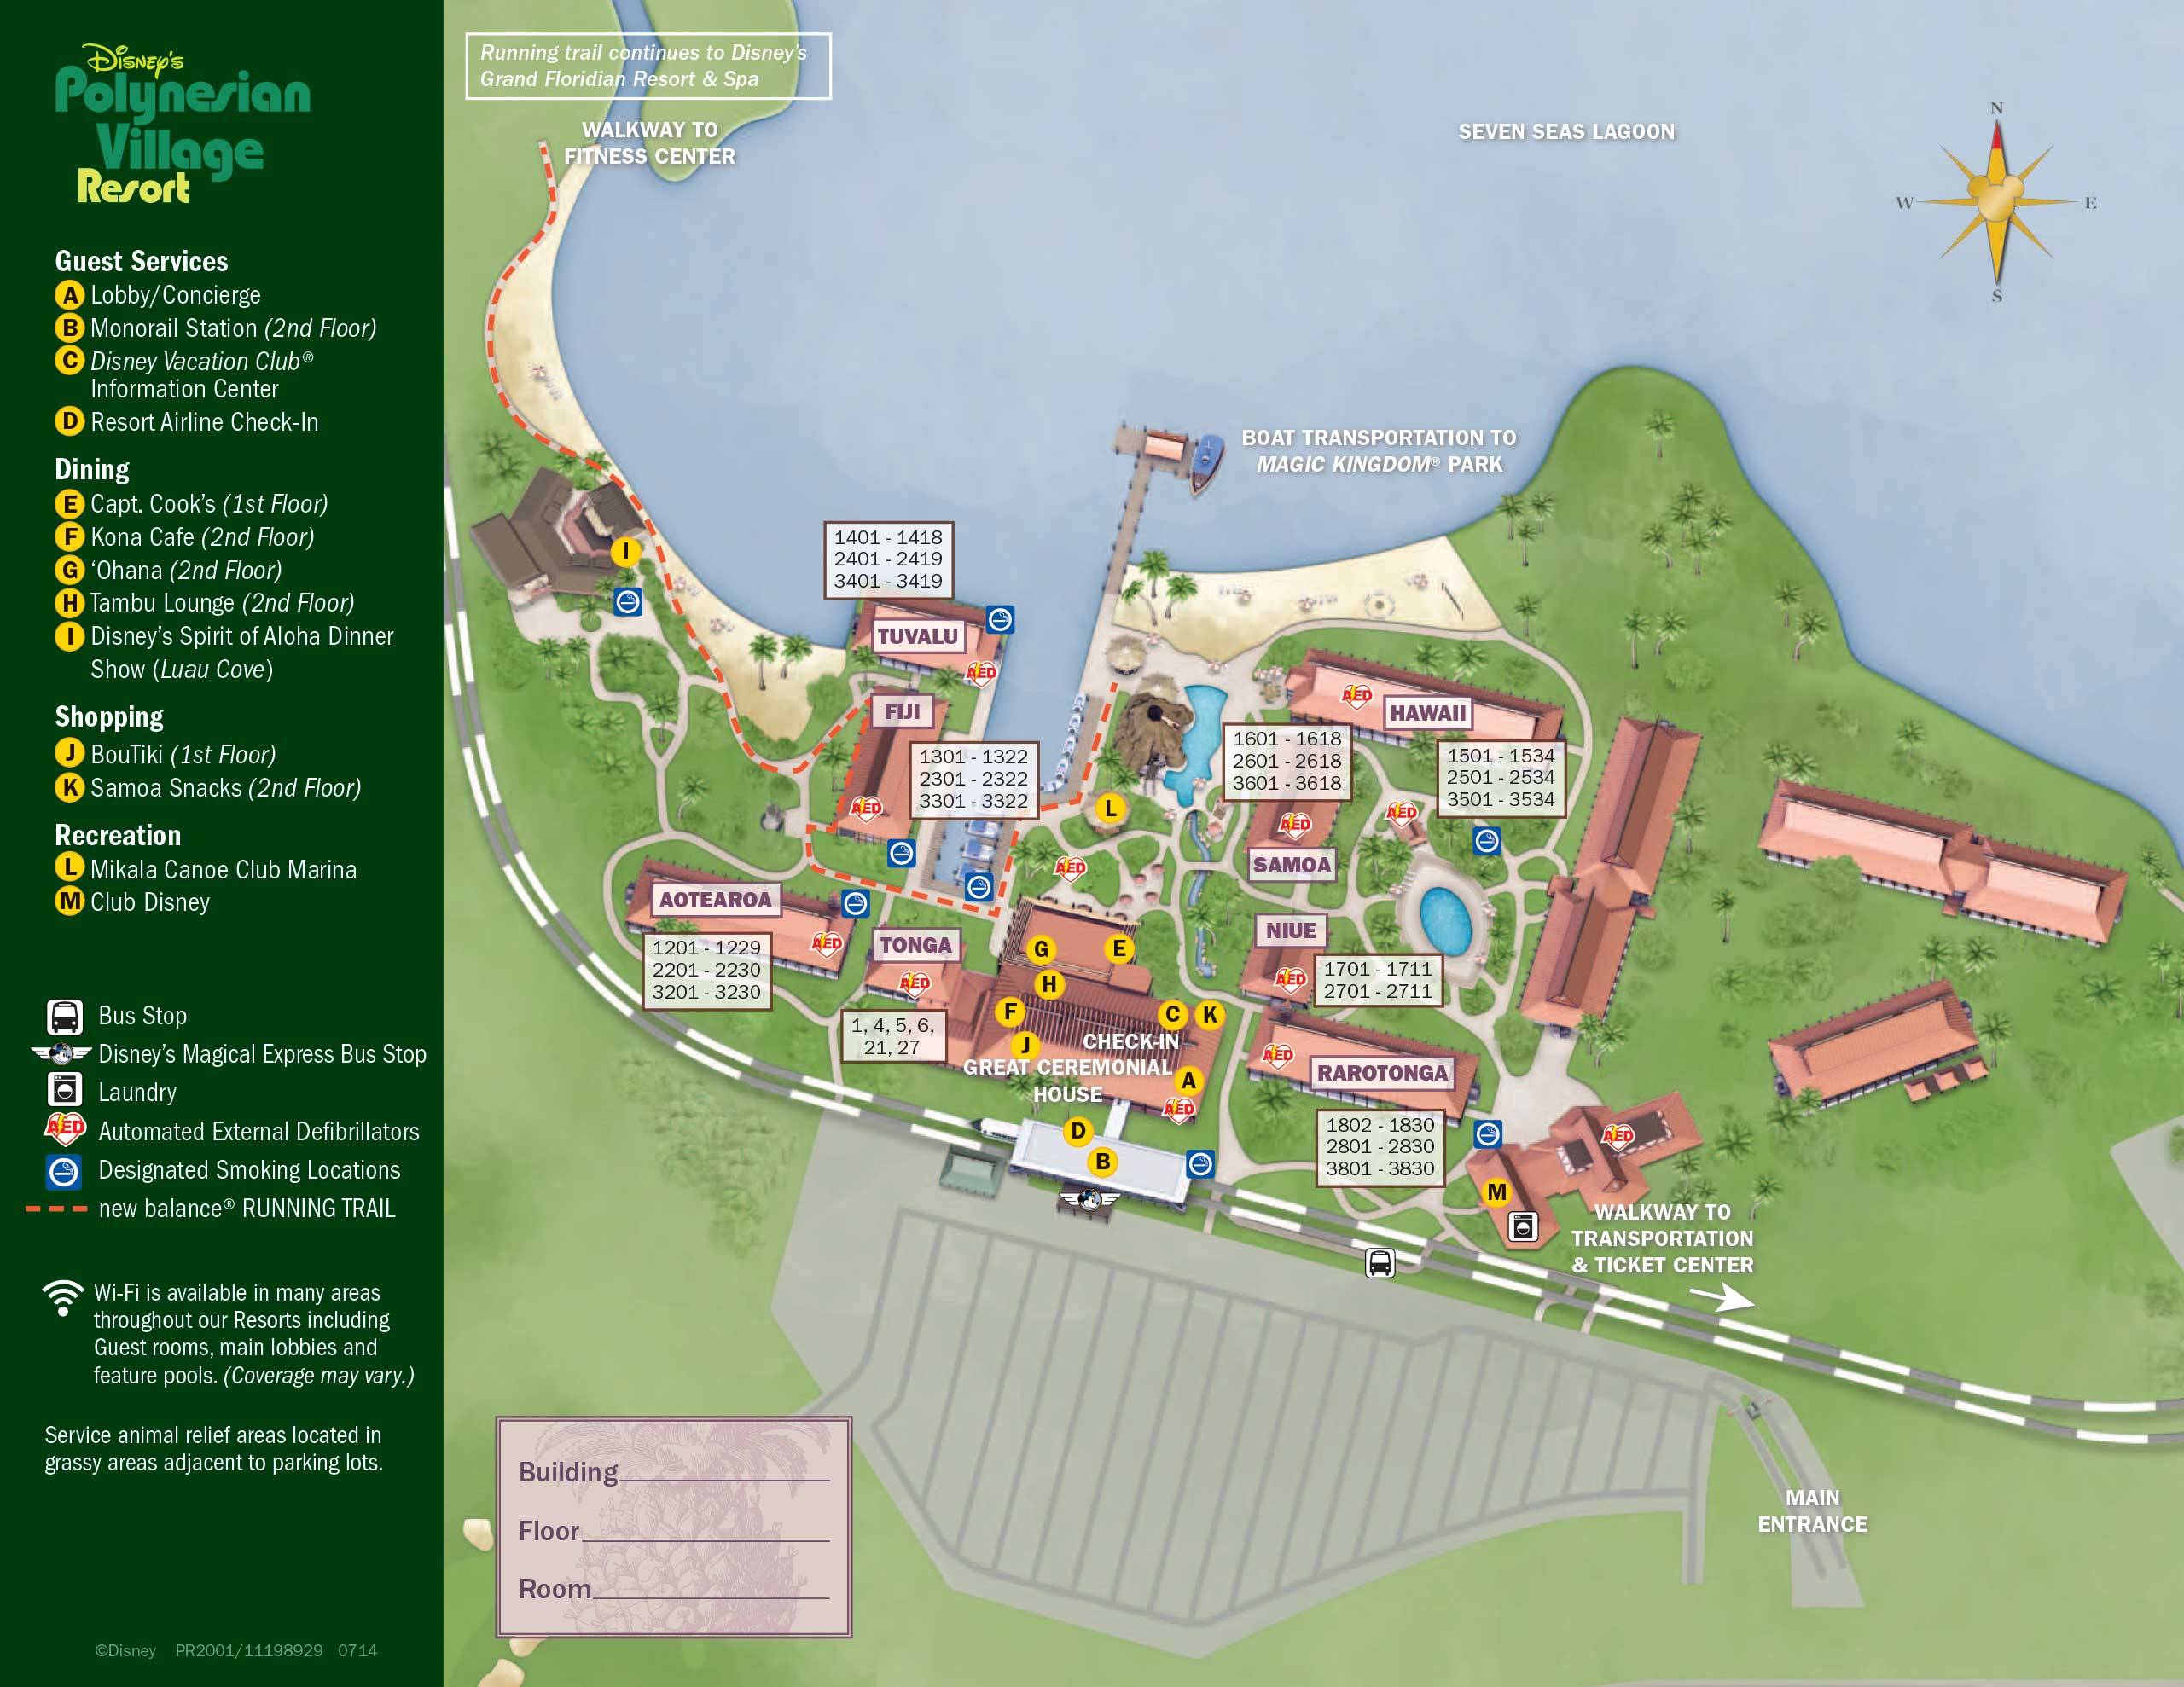 2014 Disney's Polynesian Village Resort guide map